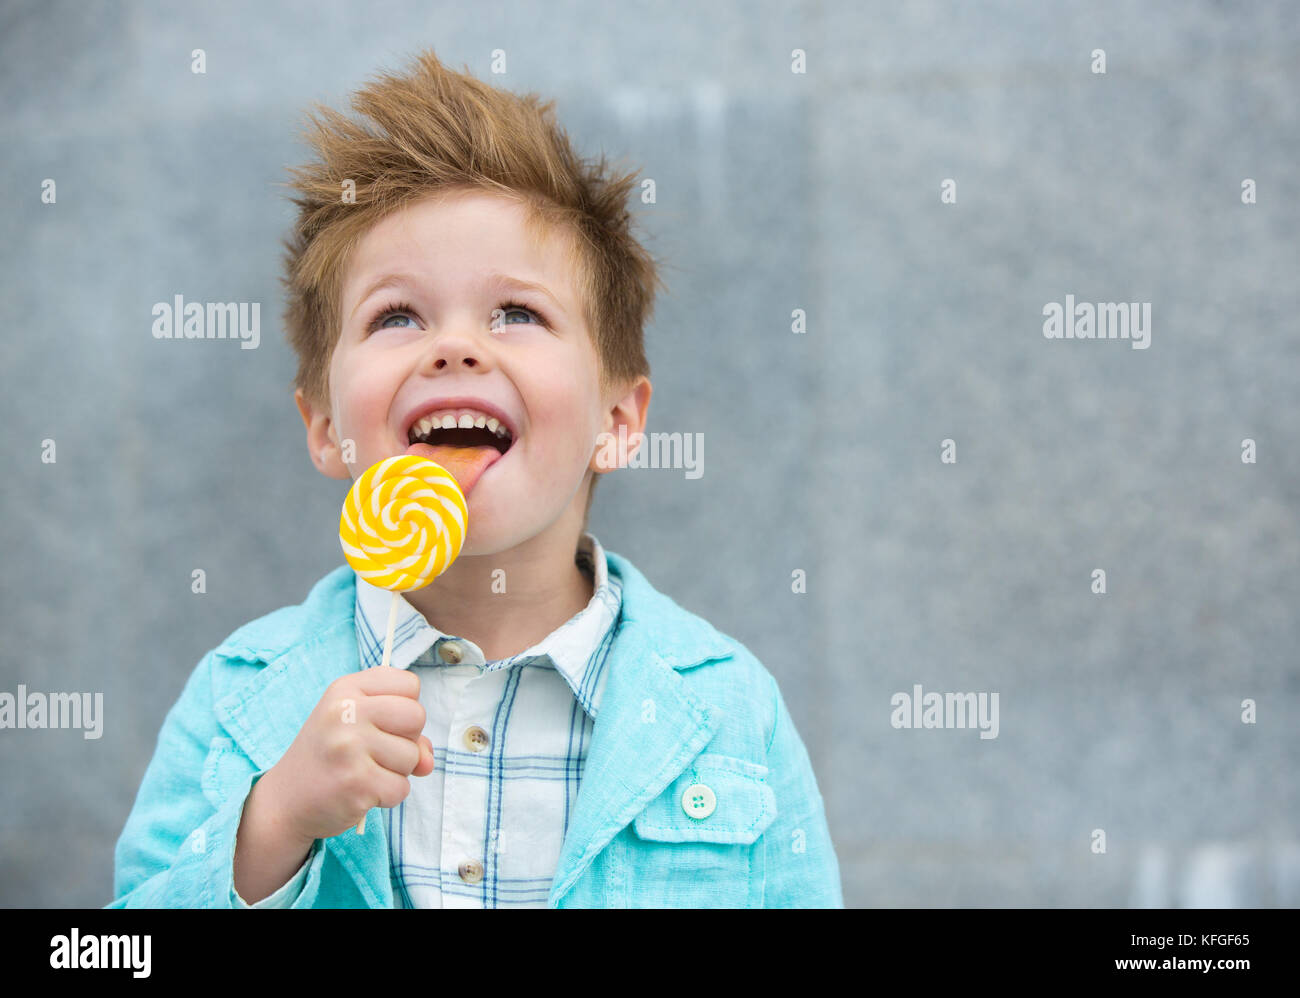 Fashion kid with lollipop near gray wall Stock Photo